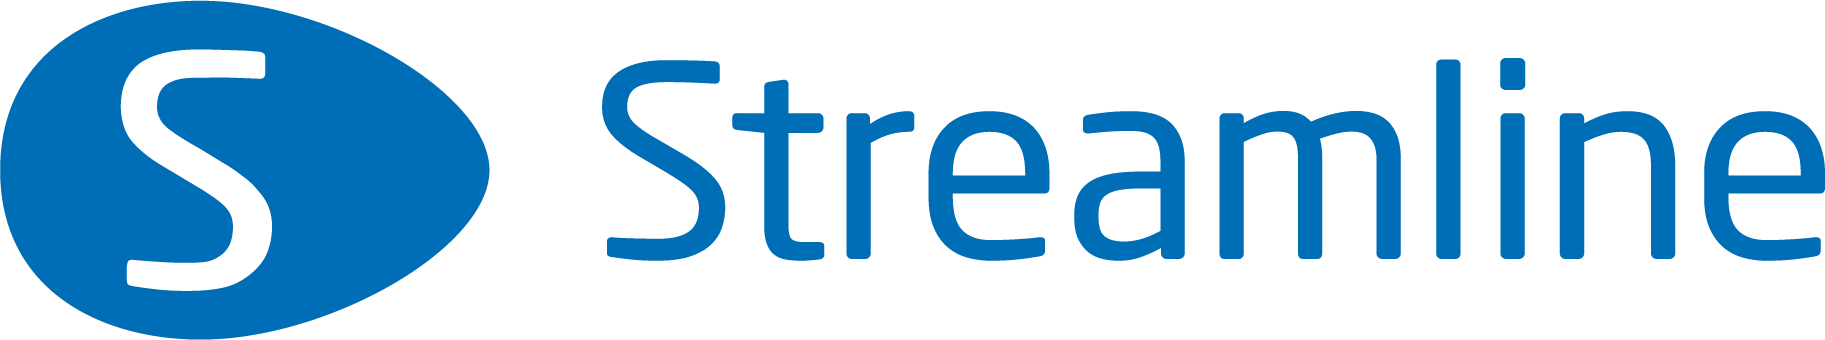 Logotipo Streamline azul